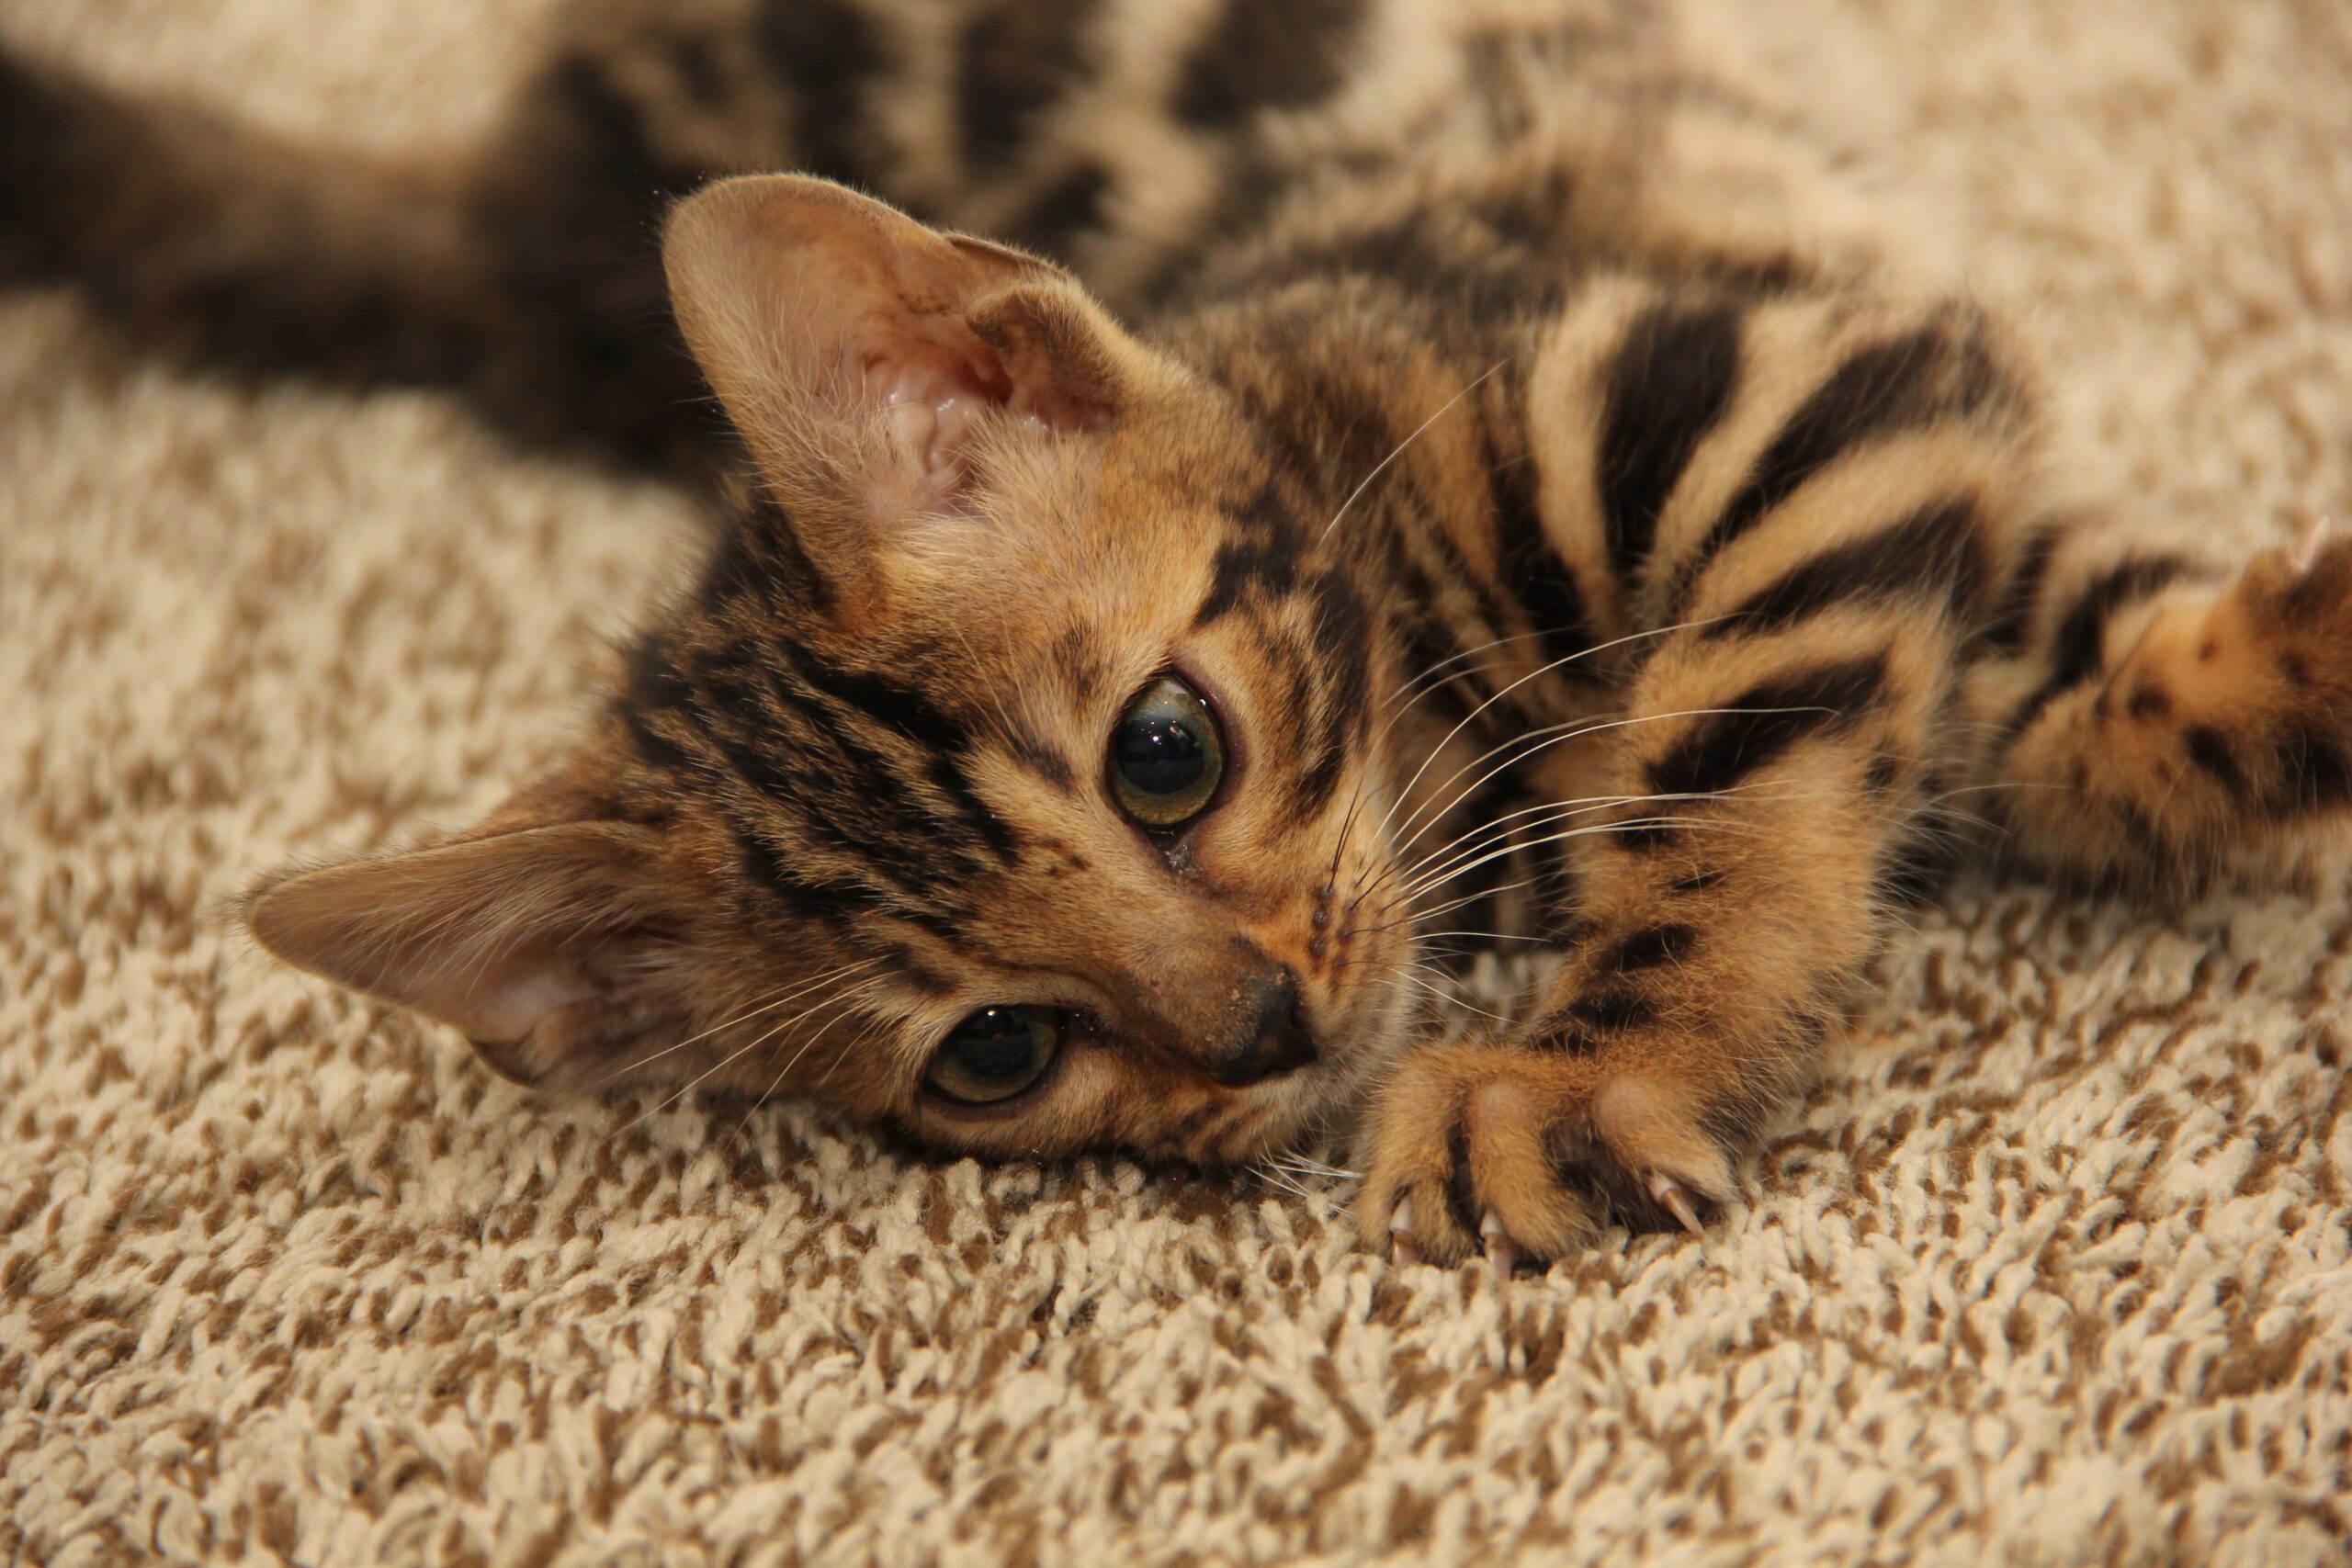 bengal kittens on carpet